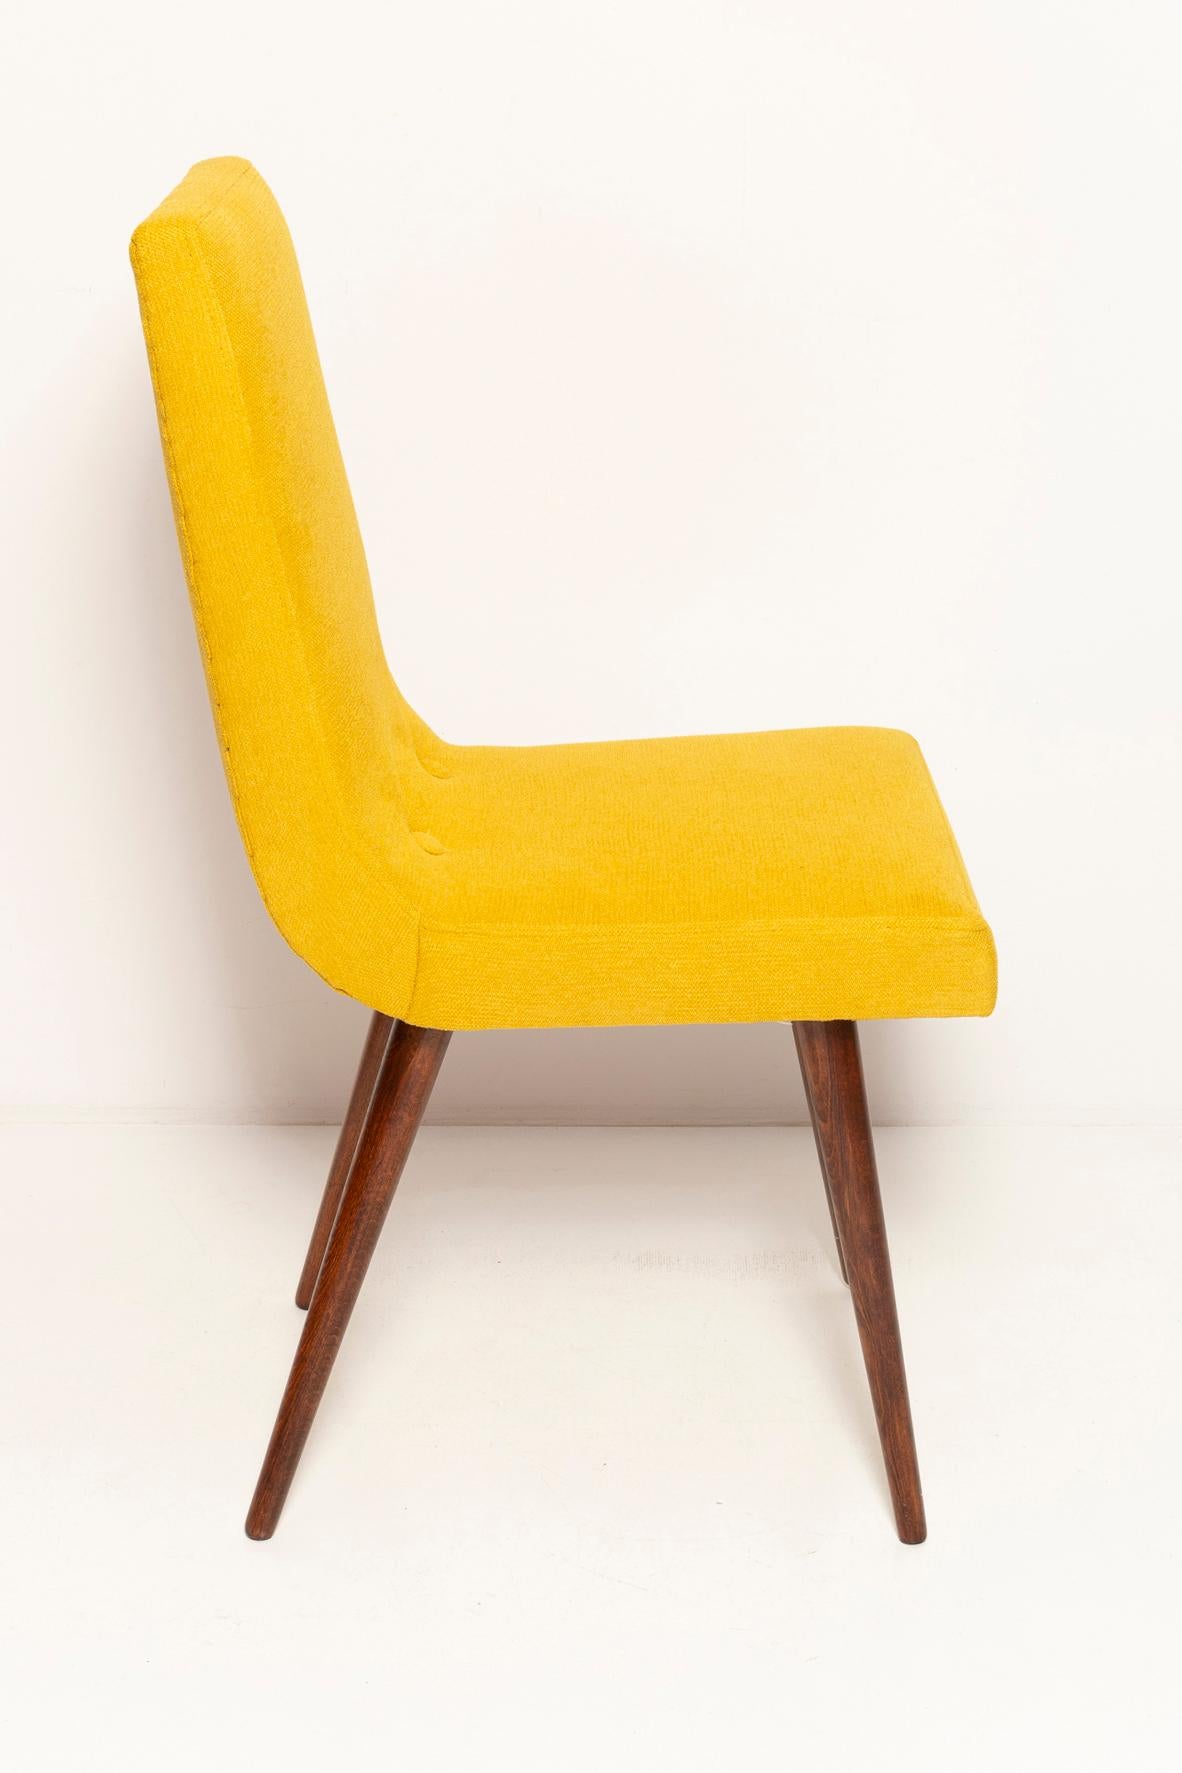 Midcentury Mustard Yellow Wool Chair, Rajmund Halas, Europe, 1960s For Sale 1